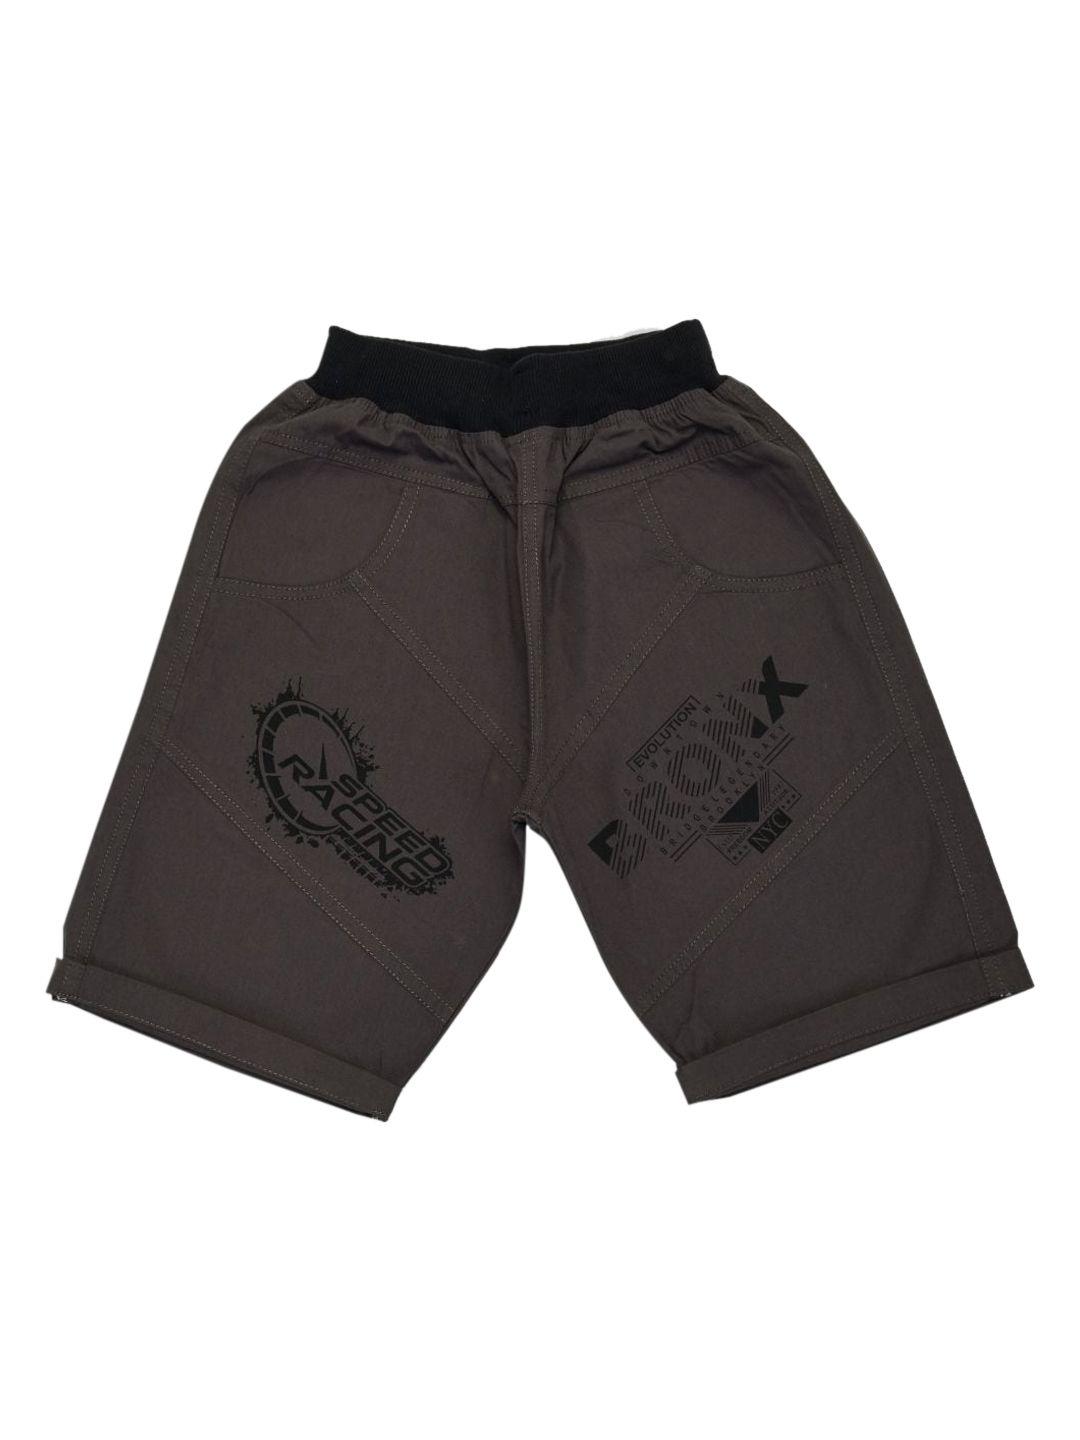 vedana boys charcoal grey typography printed cotton shorts